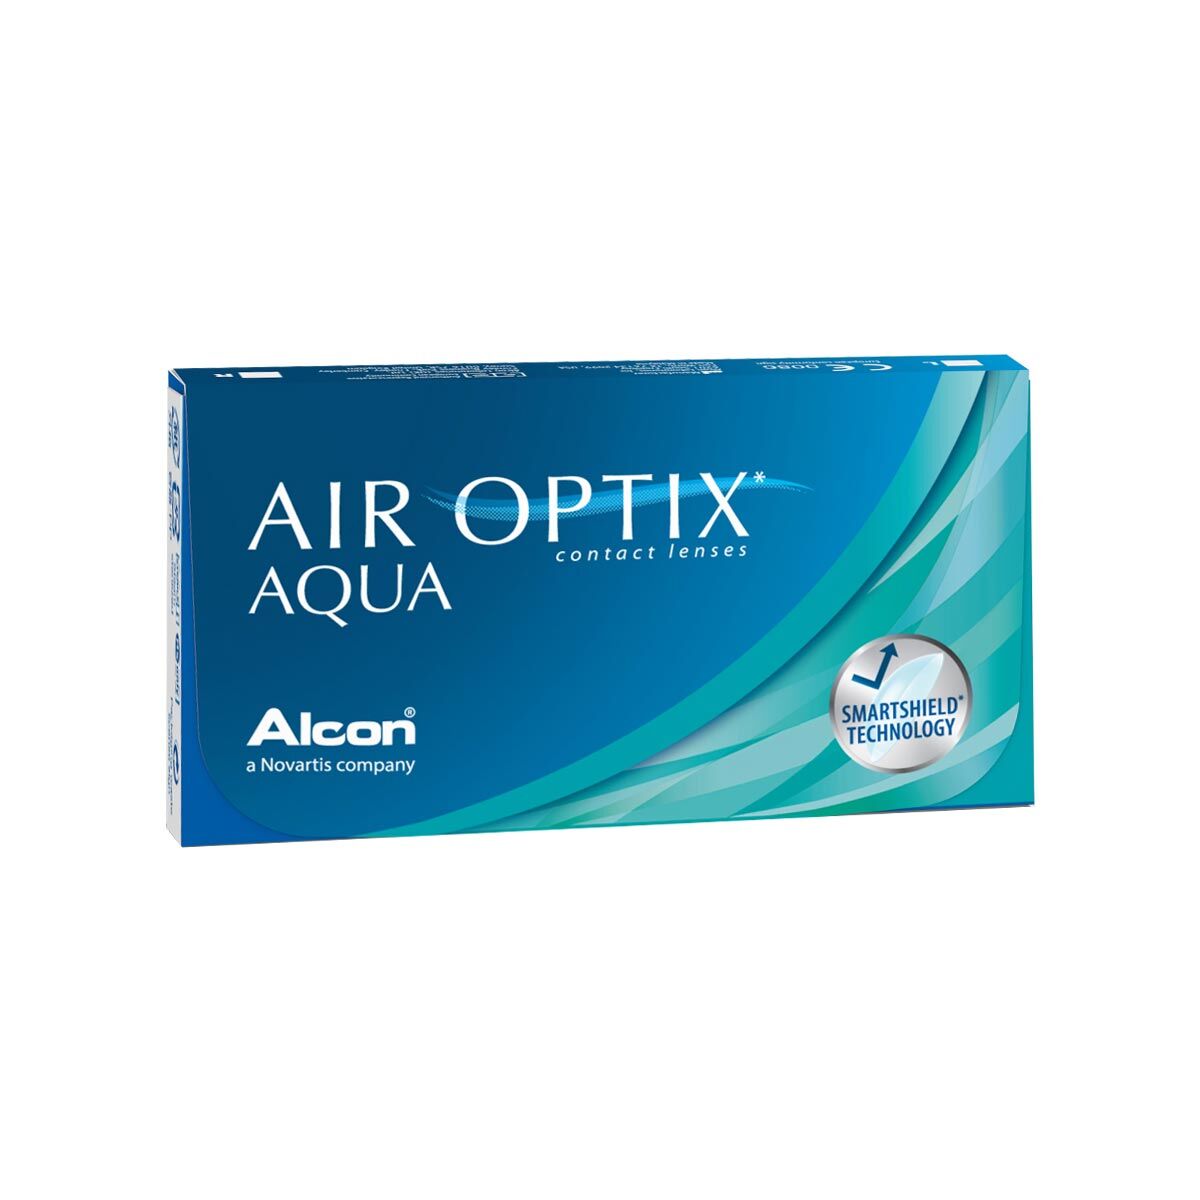 Alcon Air Optix Aqua (3 Contact Lenses), Ciba Vision/Alcon Monthly Lenses, Lotrafilcon B